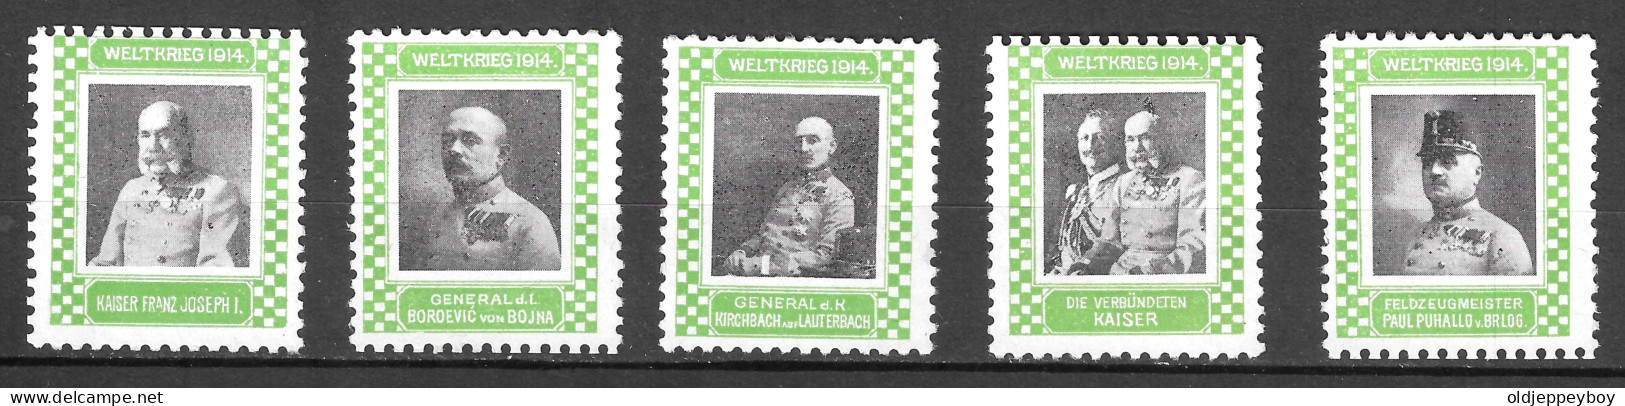 VIGNETTE CINDERELLA Erinnophilie K.U.K GERMANY AUSTRIA HUNGARY Österreich  Weltkrieg 1914 GENERALS LEADERS FULL SET 25 - Militaria